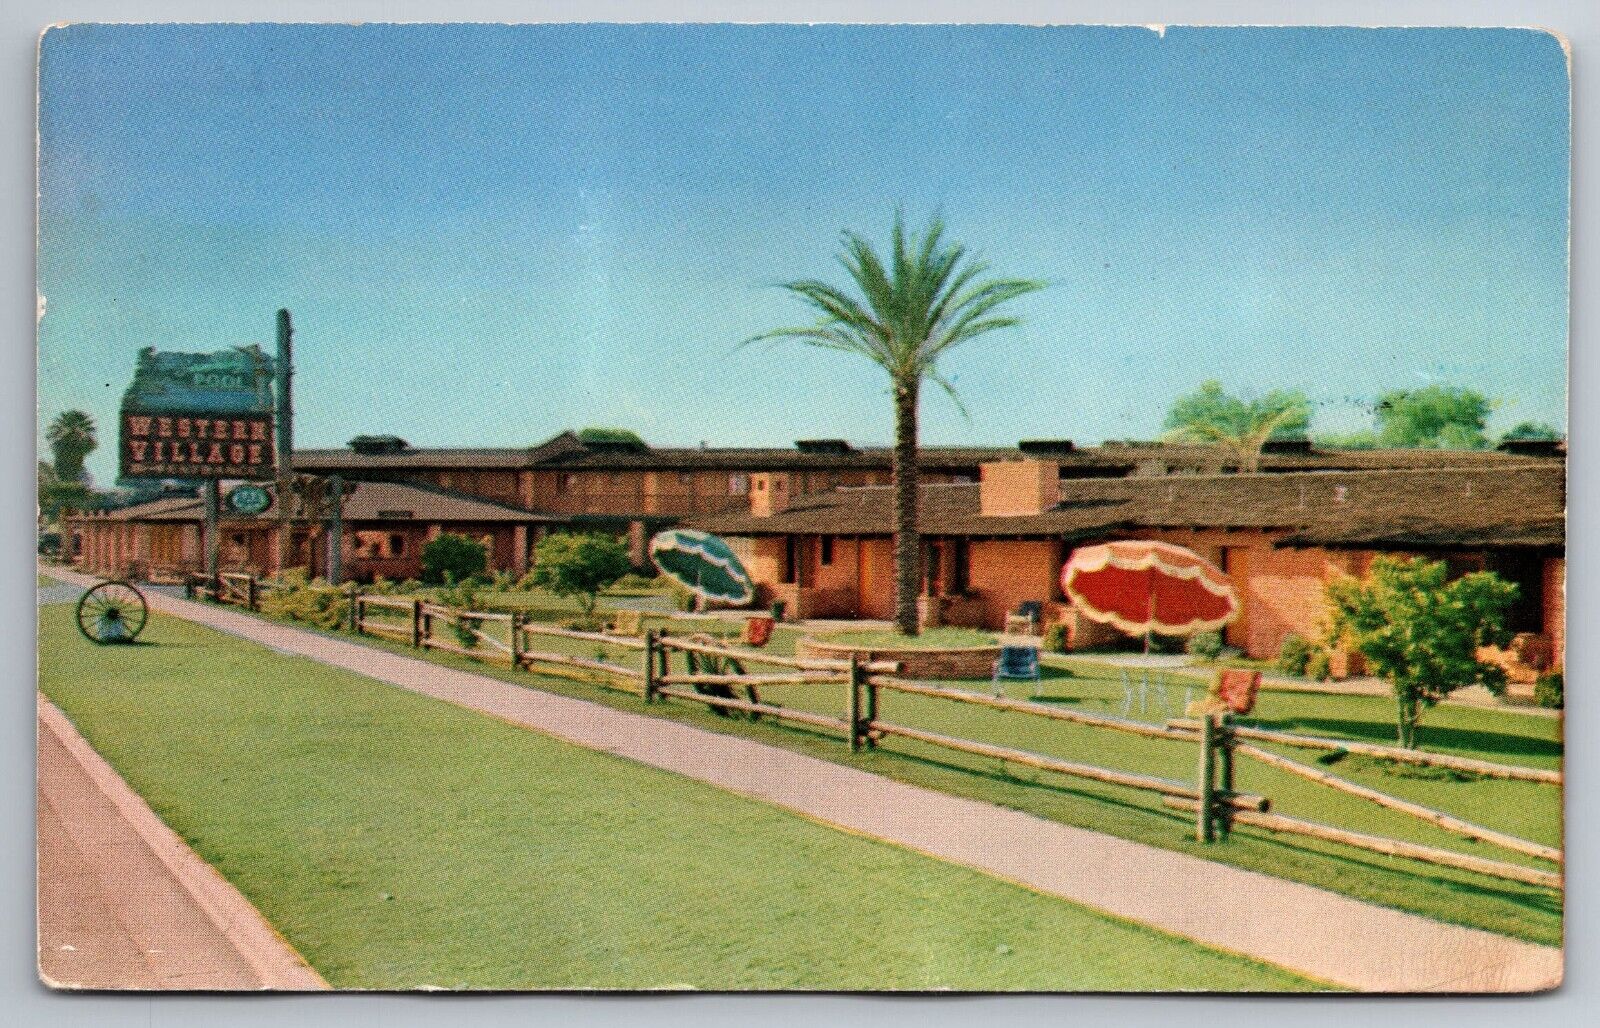 Western Village Motor Hotel Motel Grand Avenue Phoenix Arizona Postcard N719